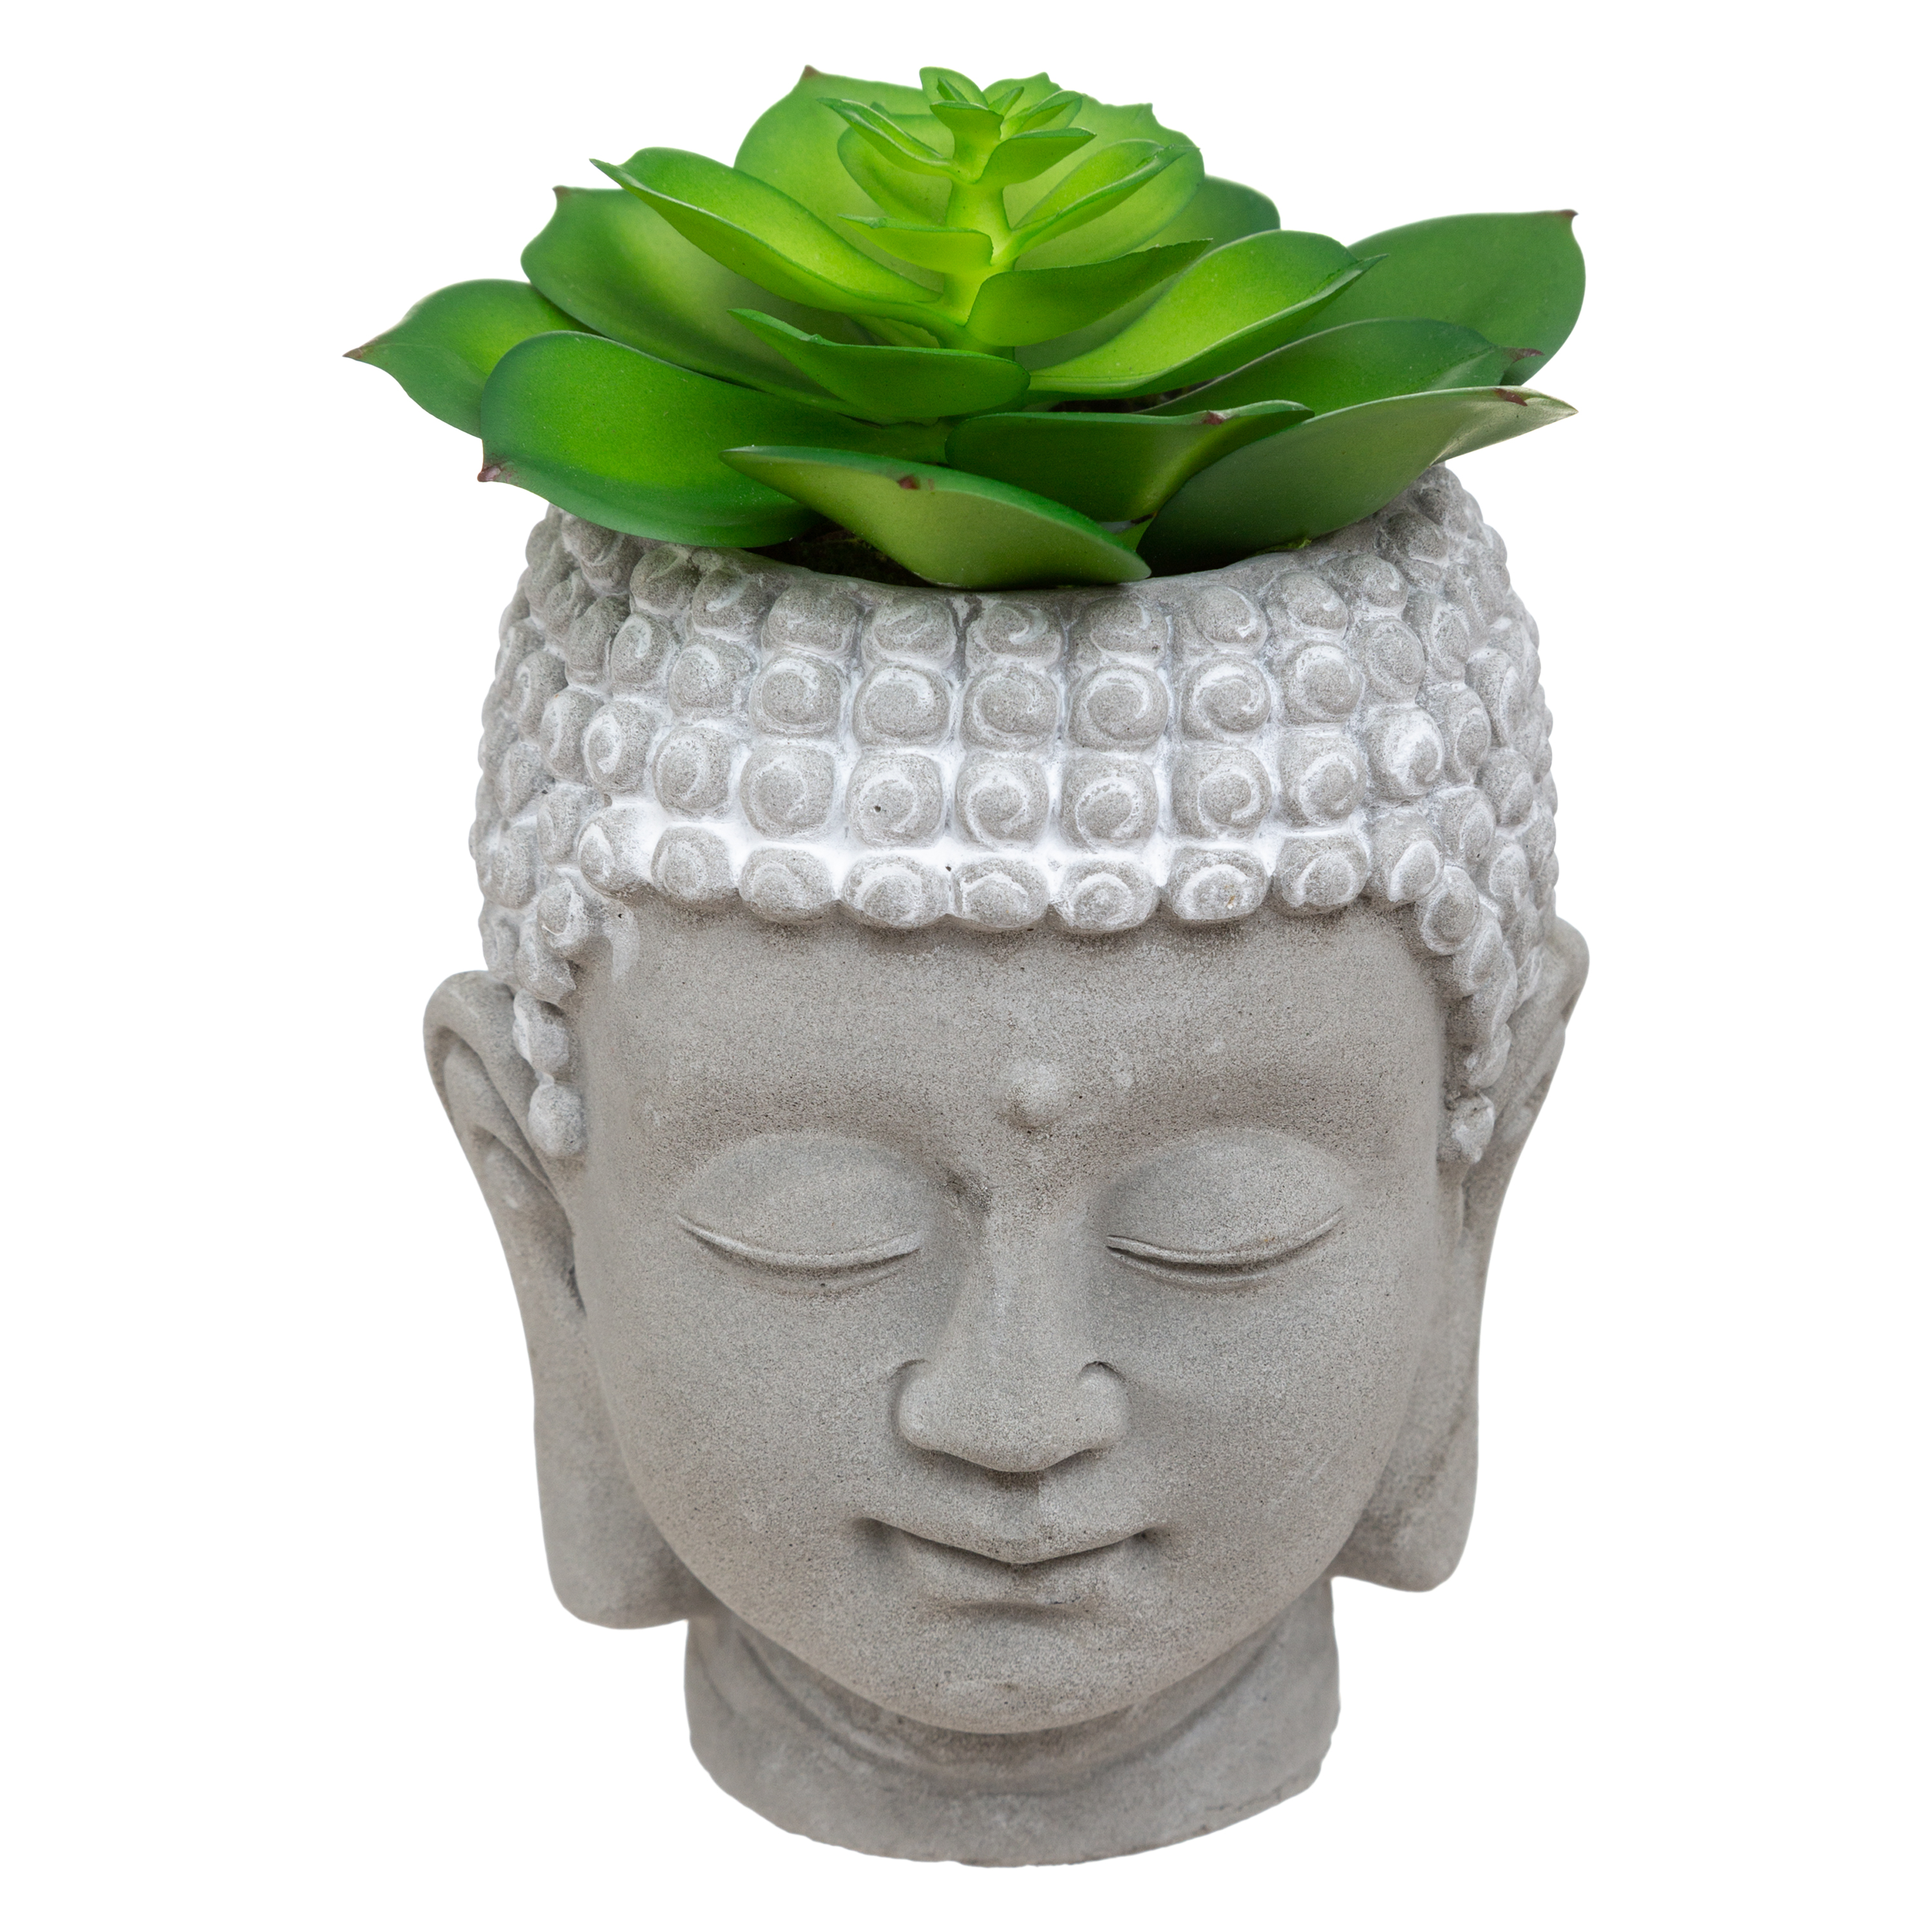 BUDDHA HEAD WITH PLANT